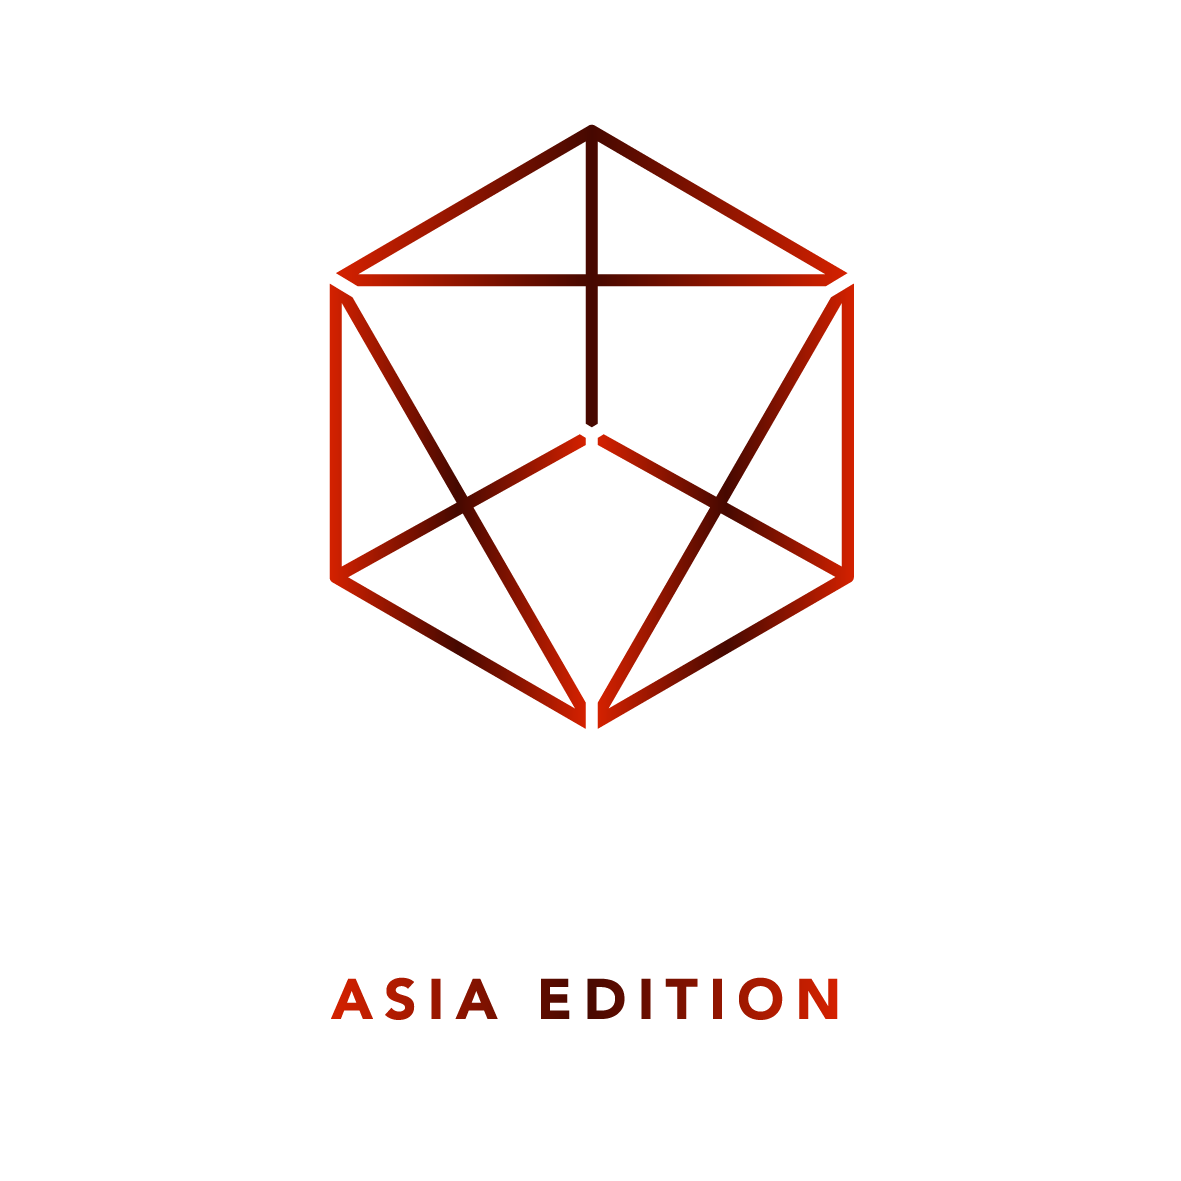 LxEscape_AsiaEdition_logo